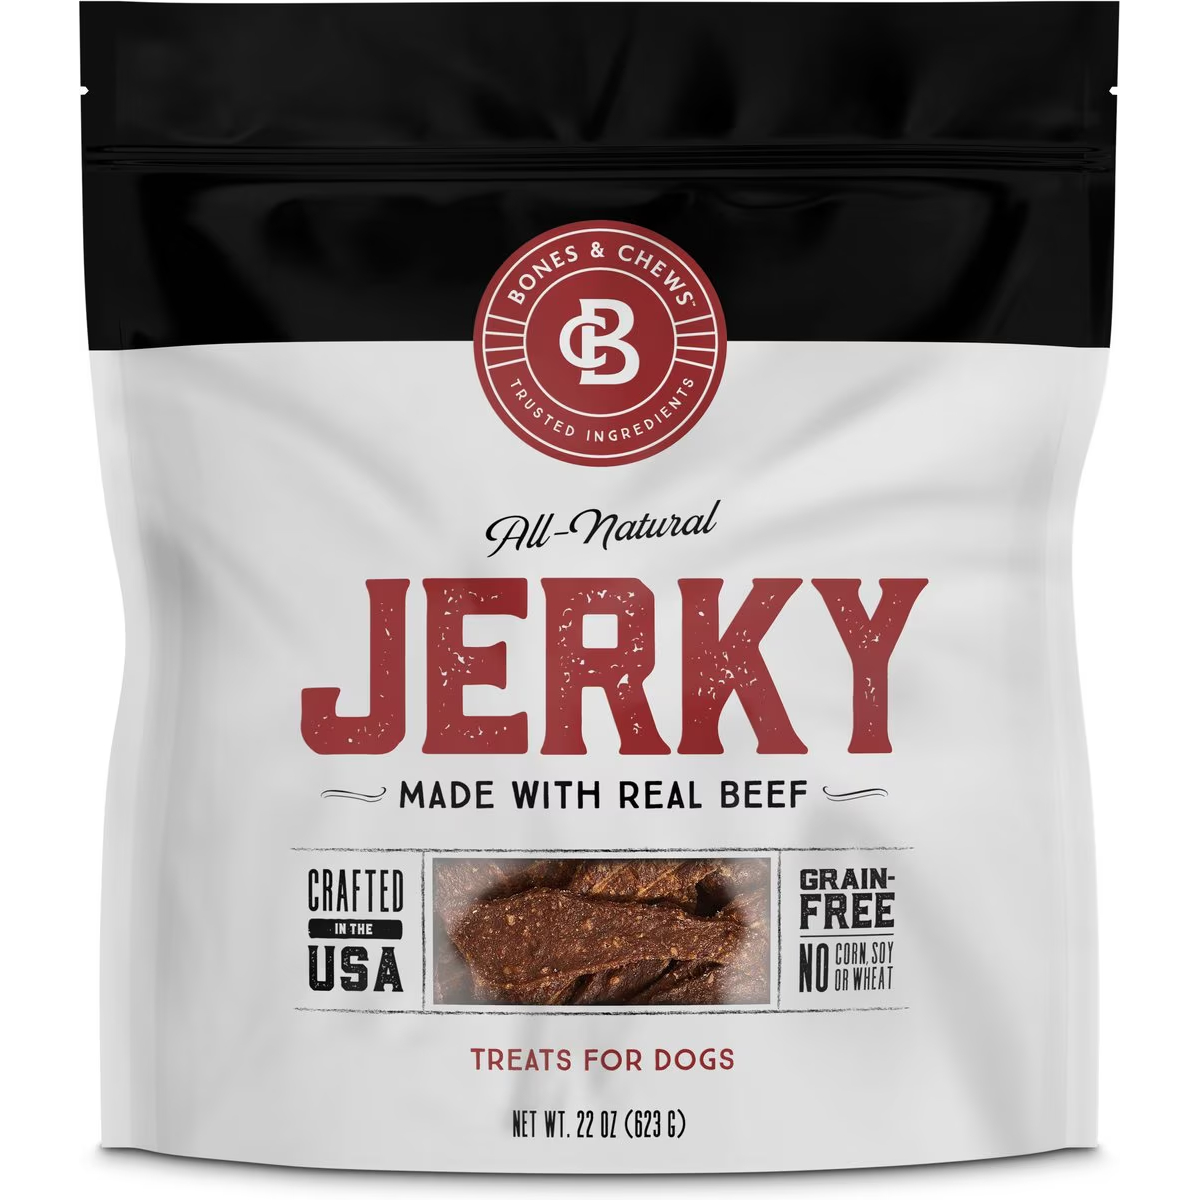 Bones & Chews All-Natural Grain-Free Jerky